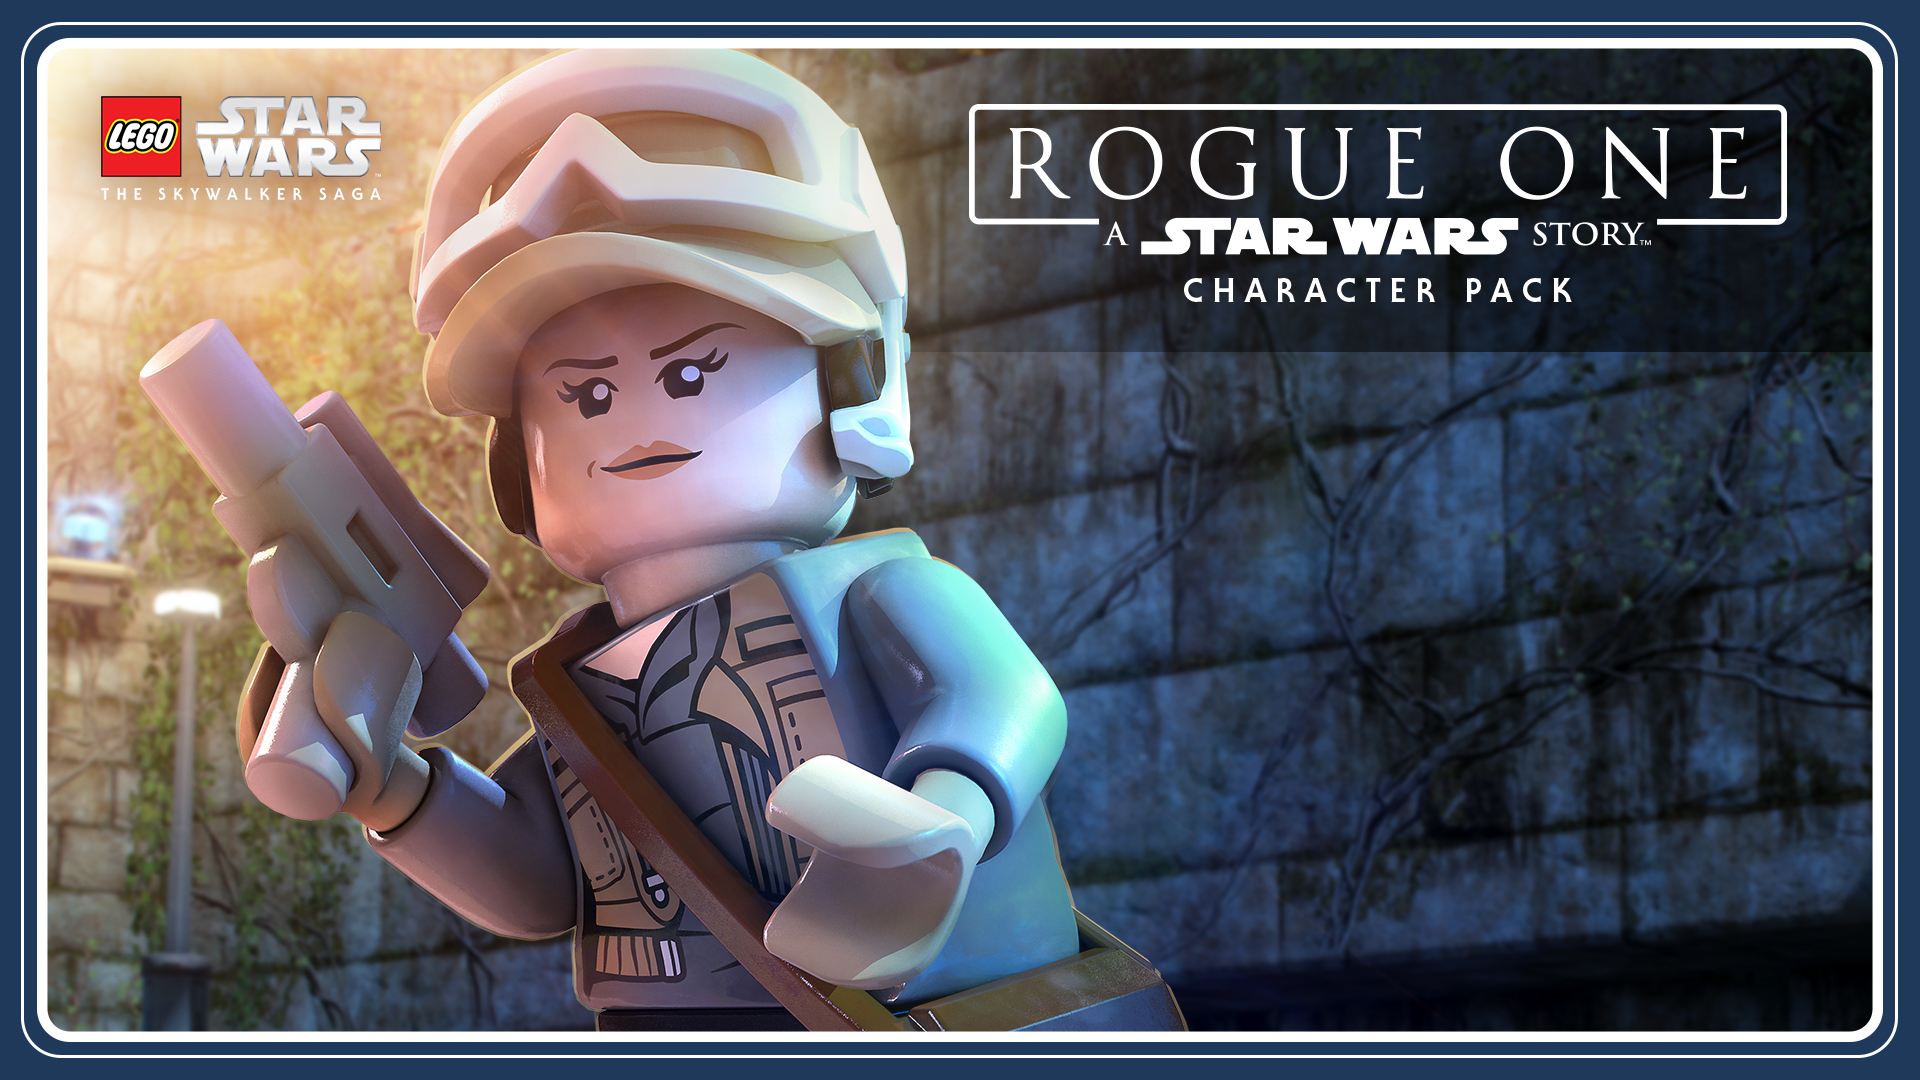 LEGO® Star Wars™:The Skywalker Saga Deluxe Edition for Nintendo